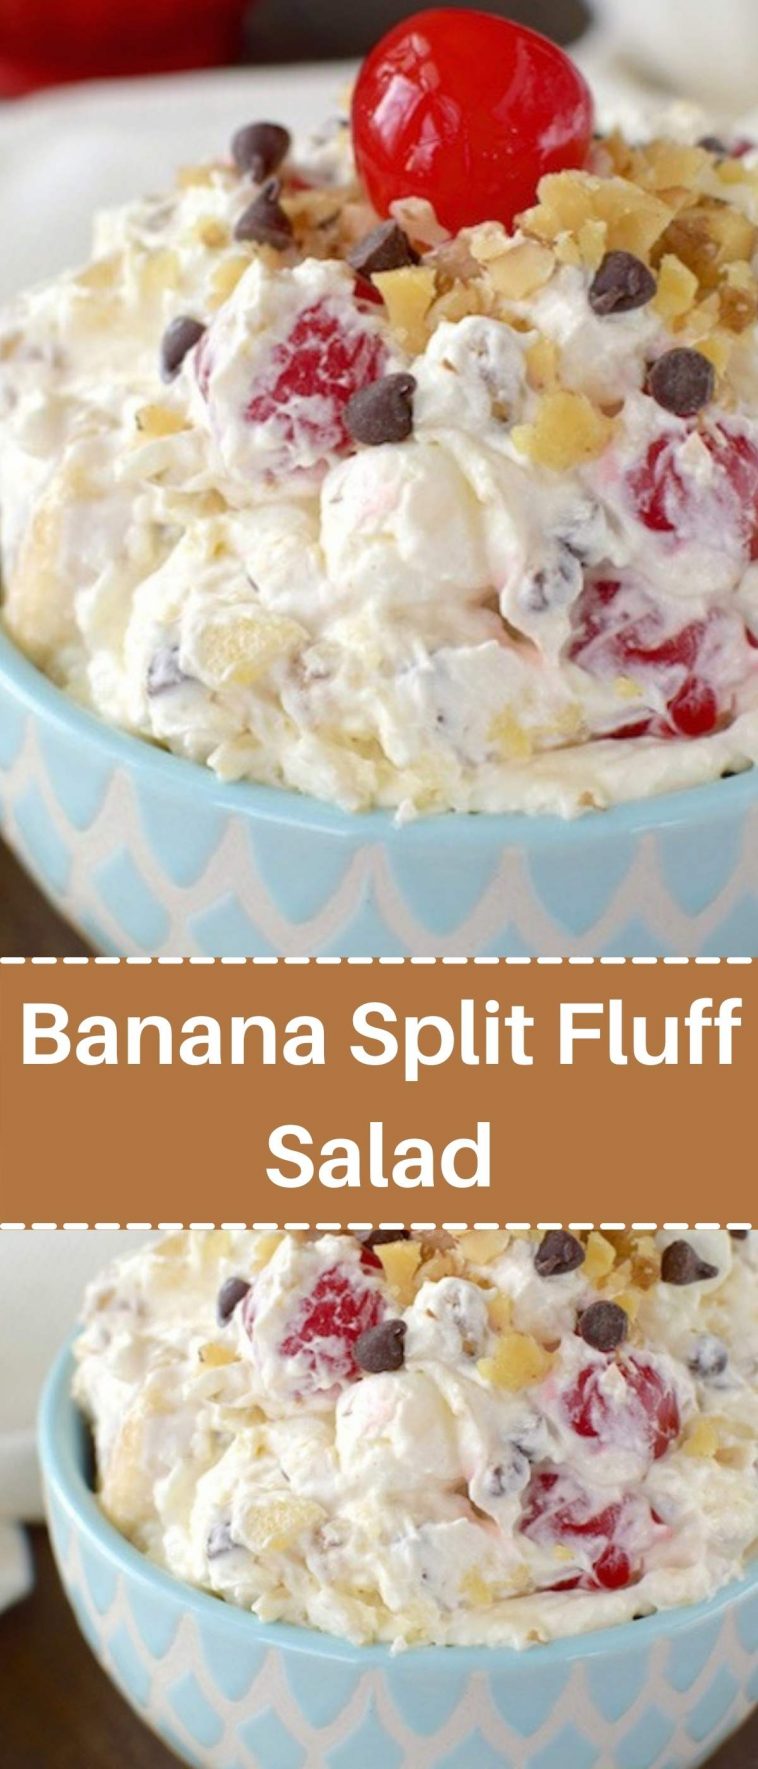 Banana Split Fluff Salad